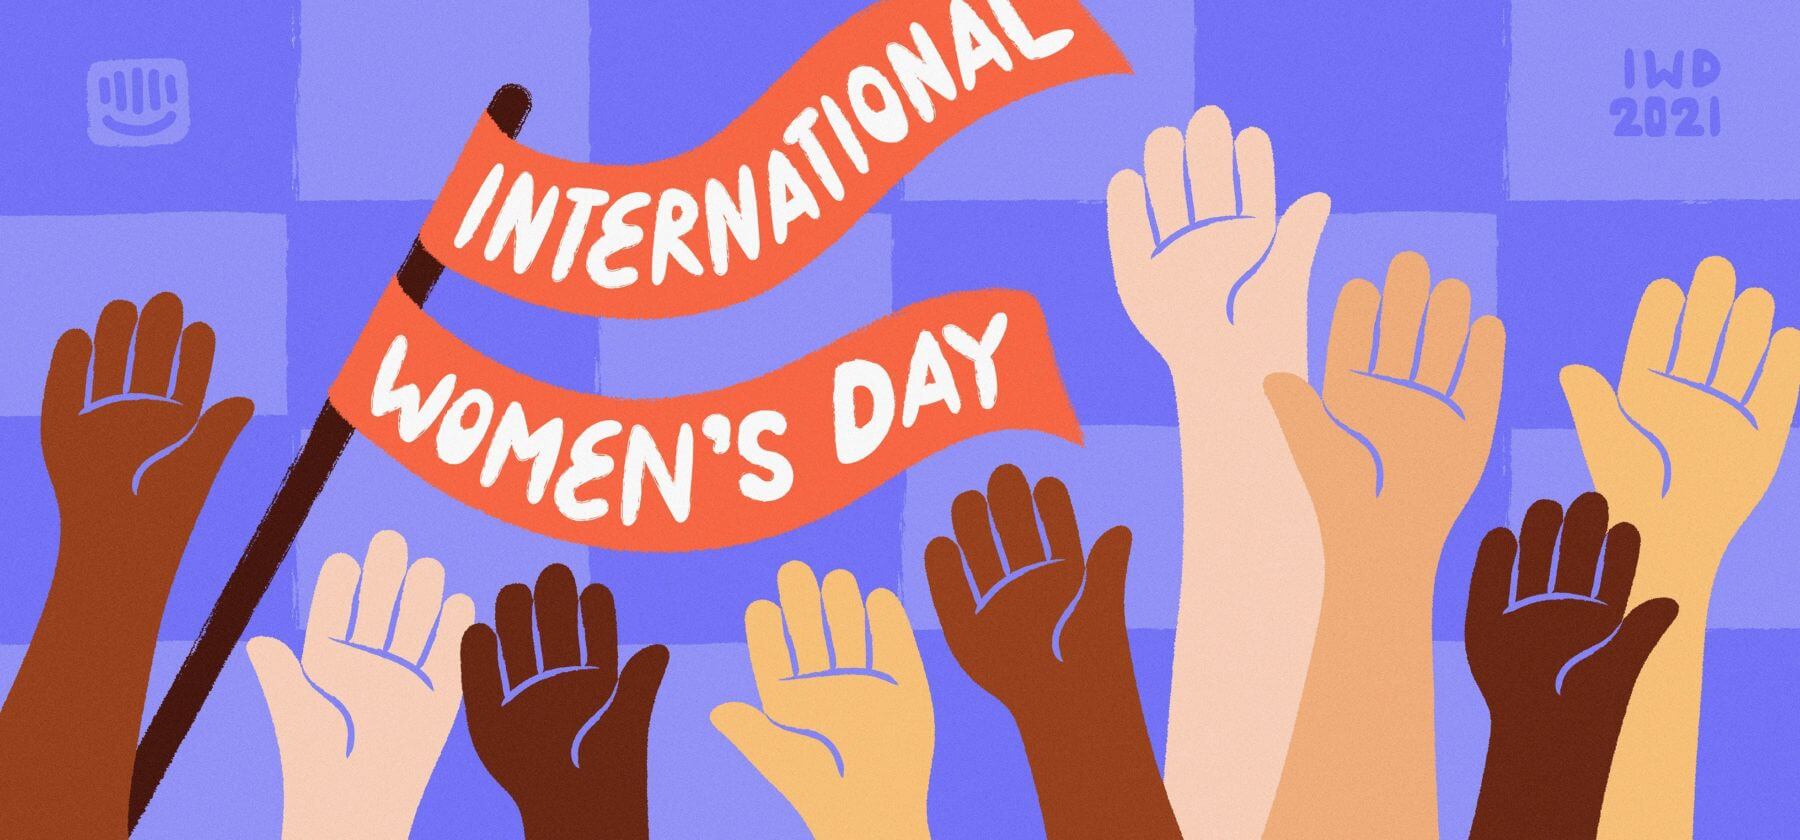 3 Key Takeaways from International Women's Day 2021 - The Intercom ...